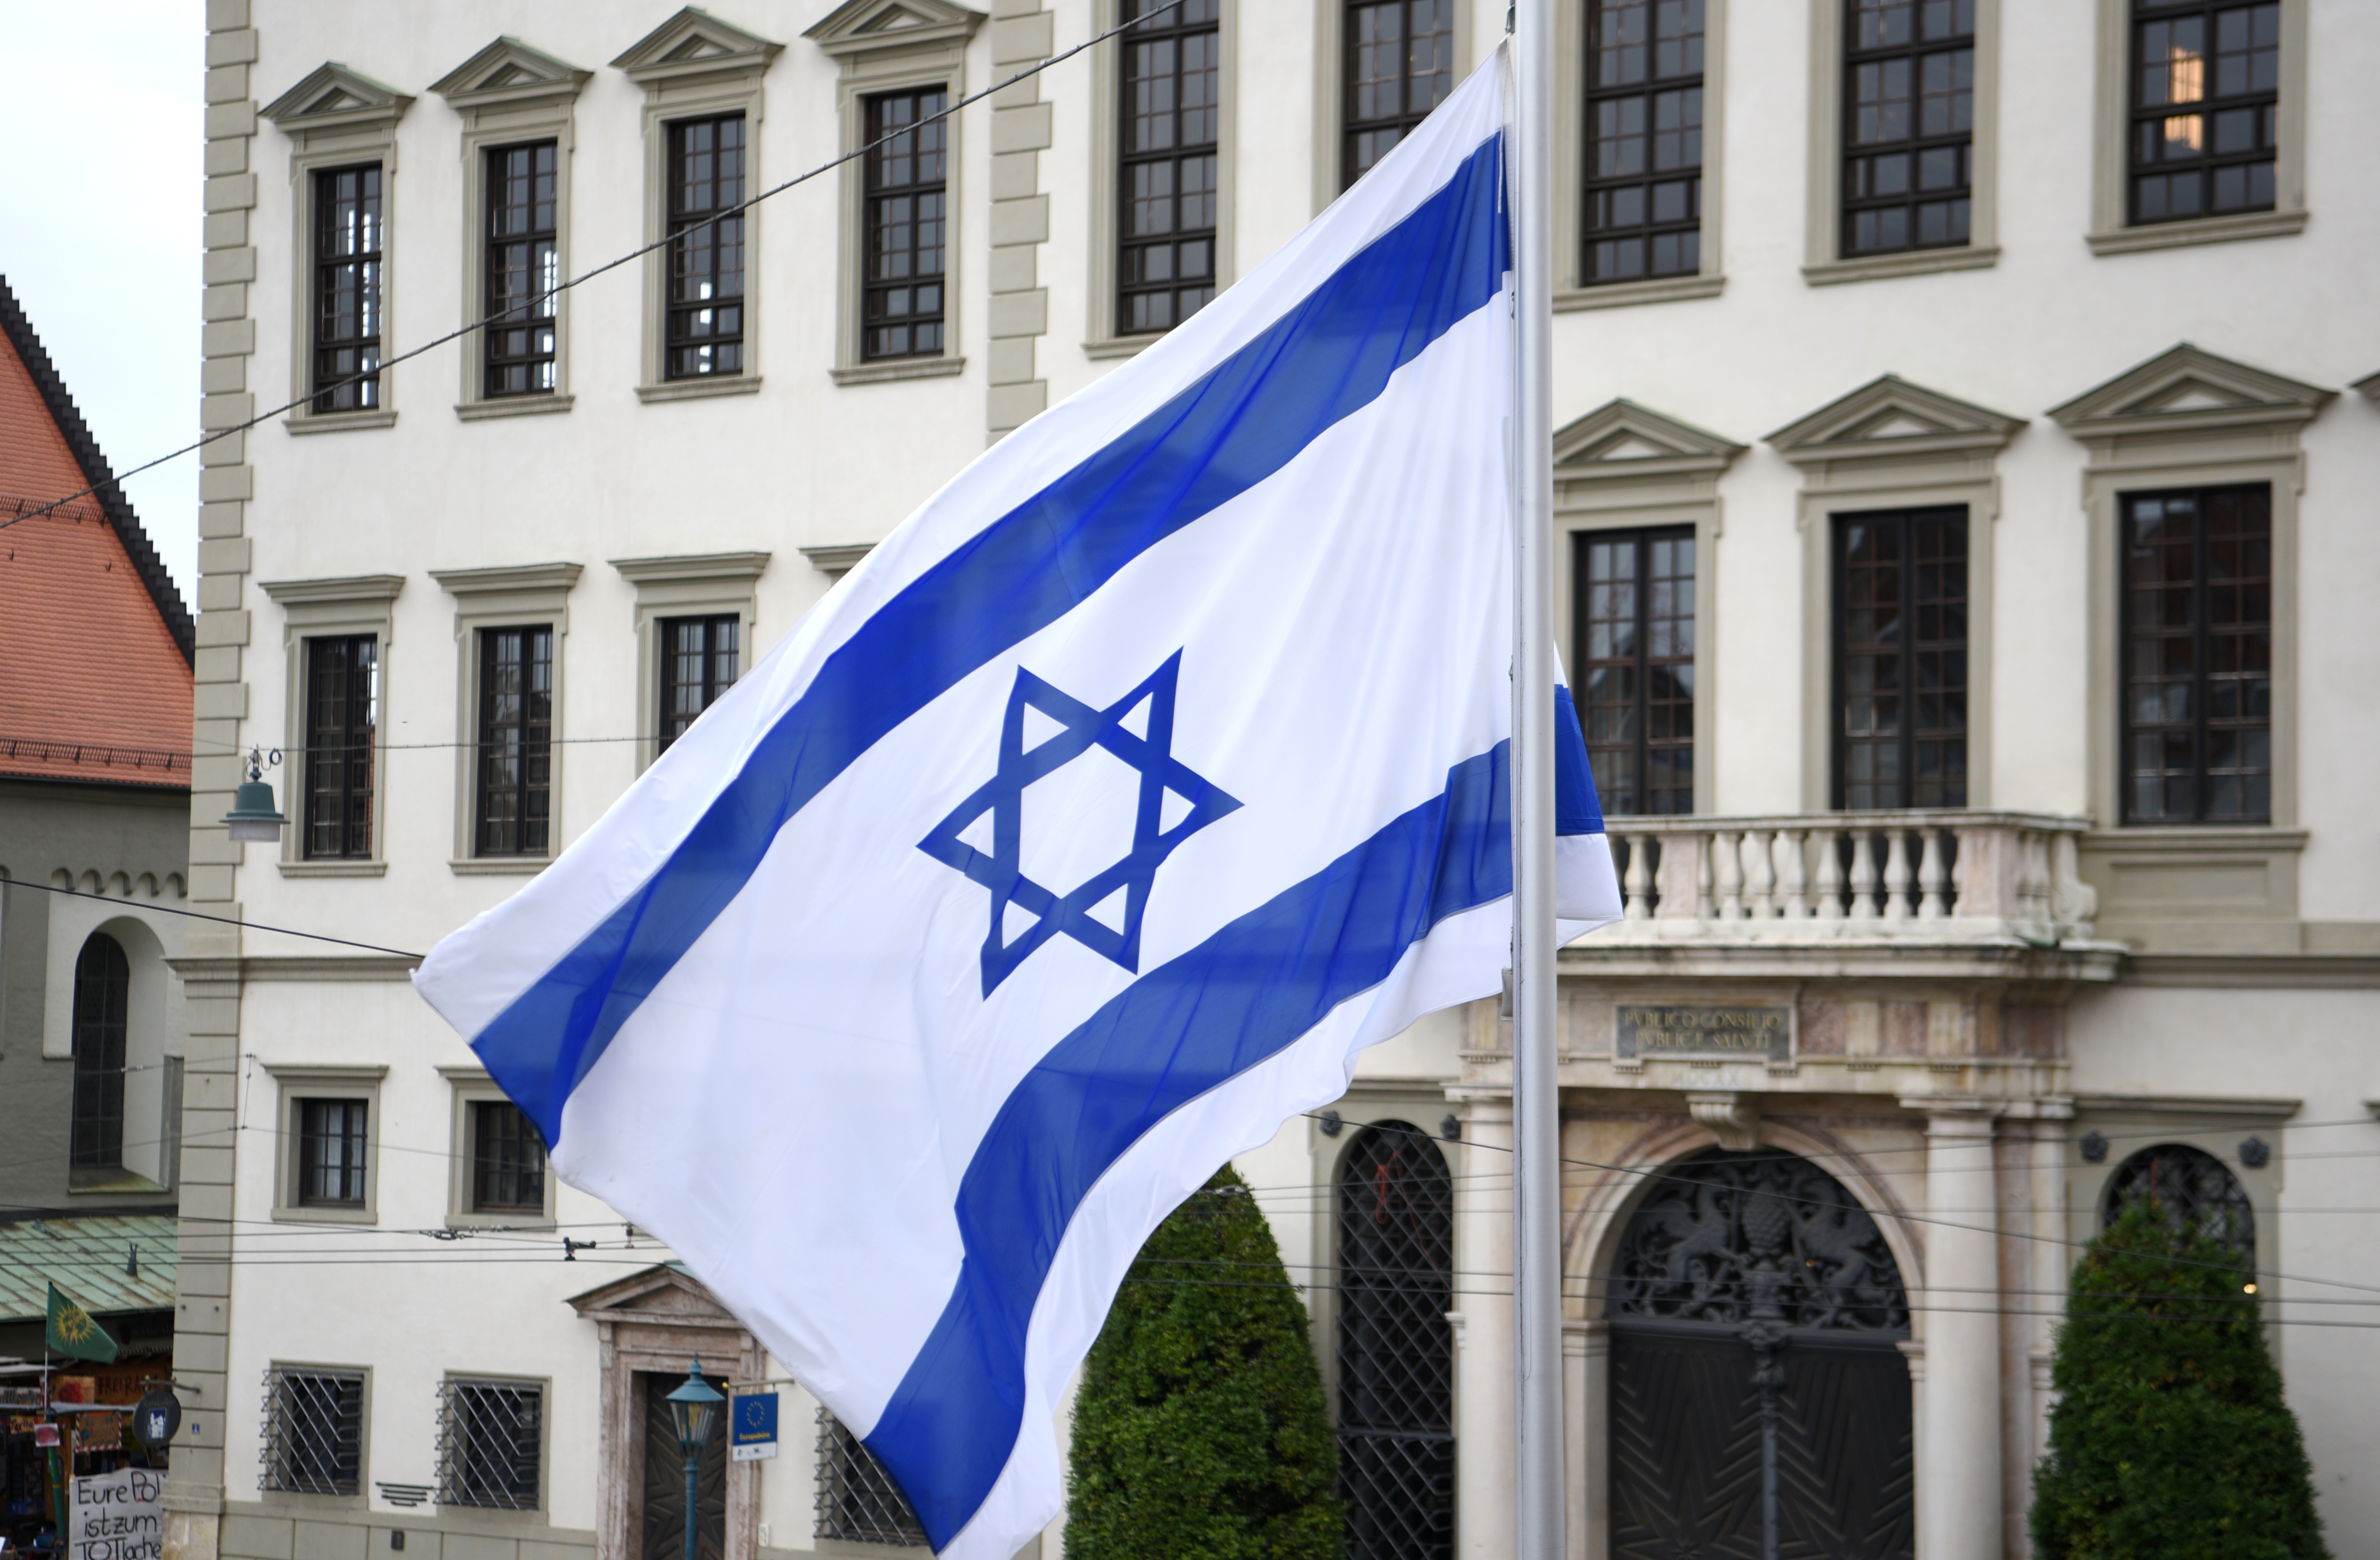 Stadt Augsburg erneuert Israel-Flagge